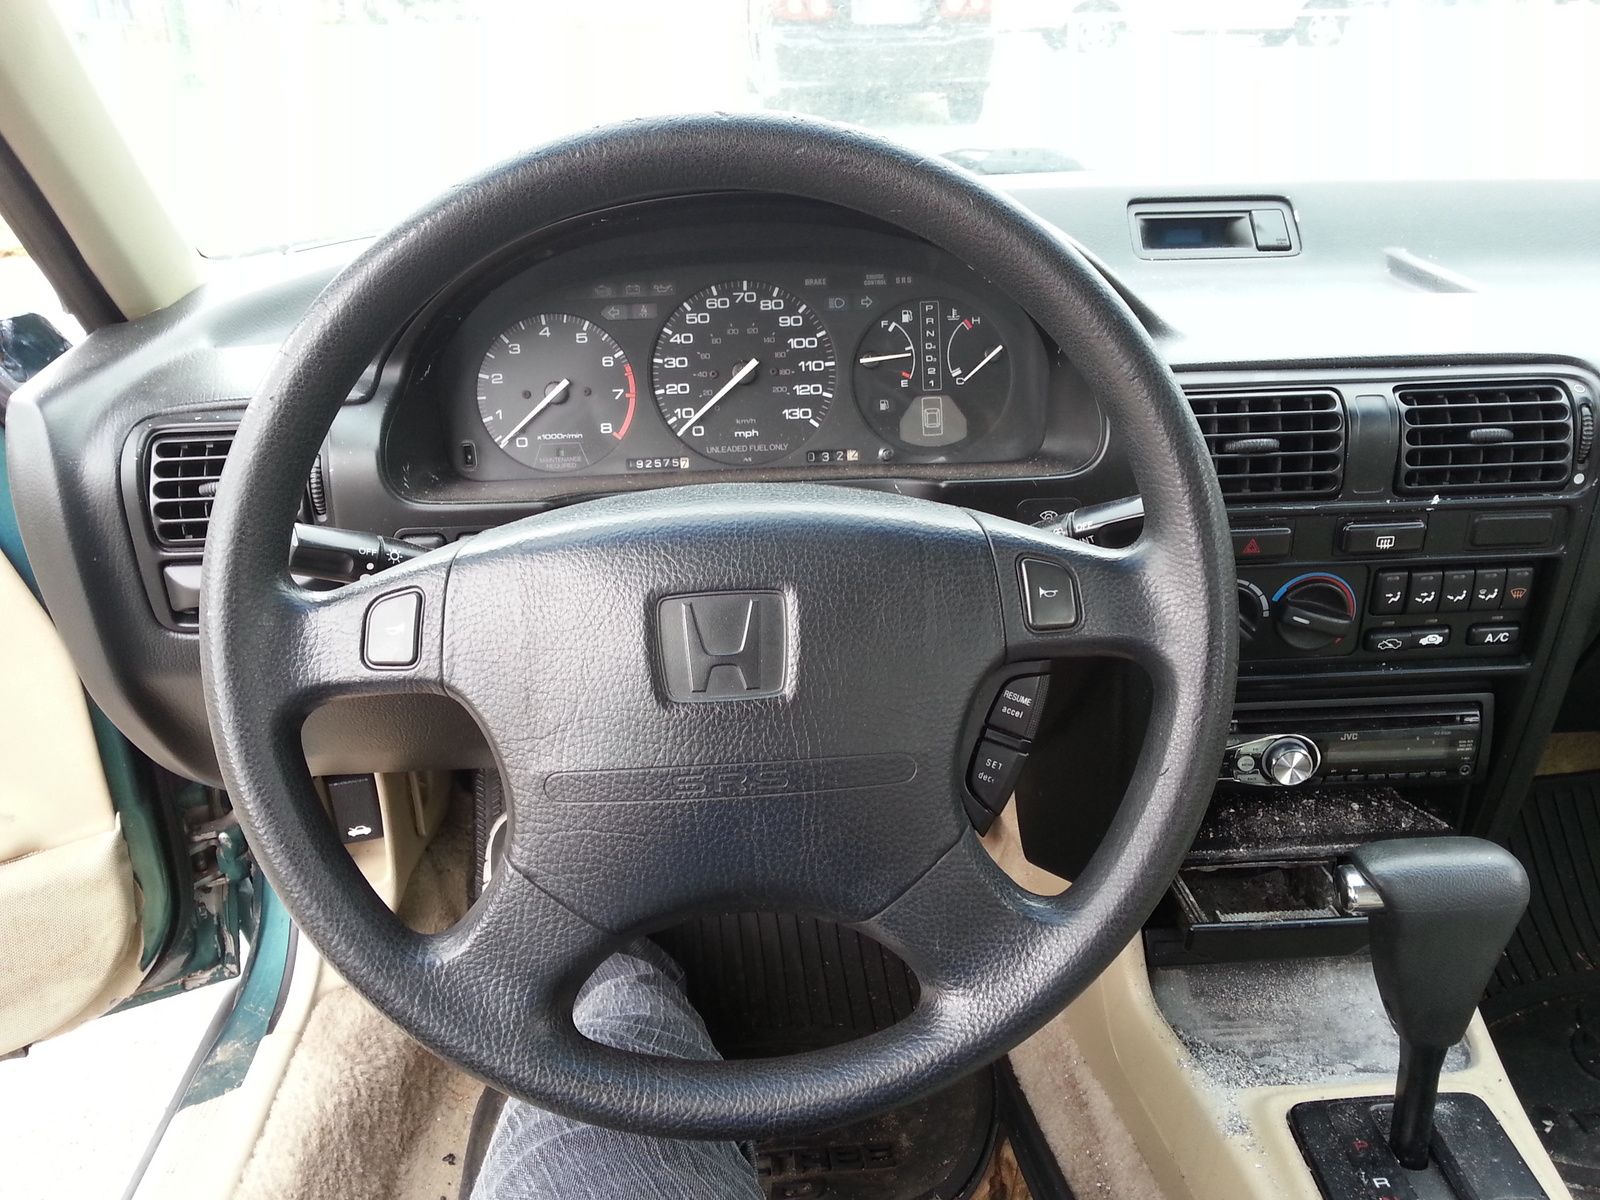 1993 Honda accord lx seats #4